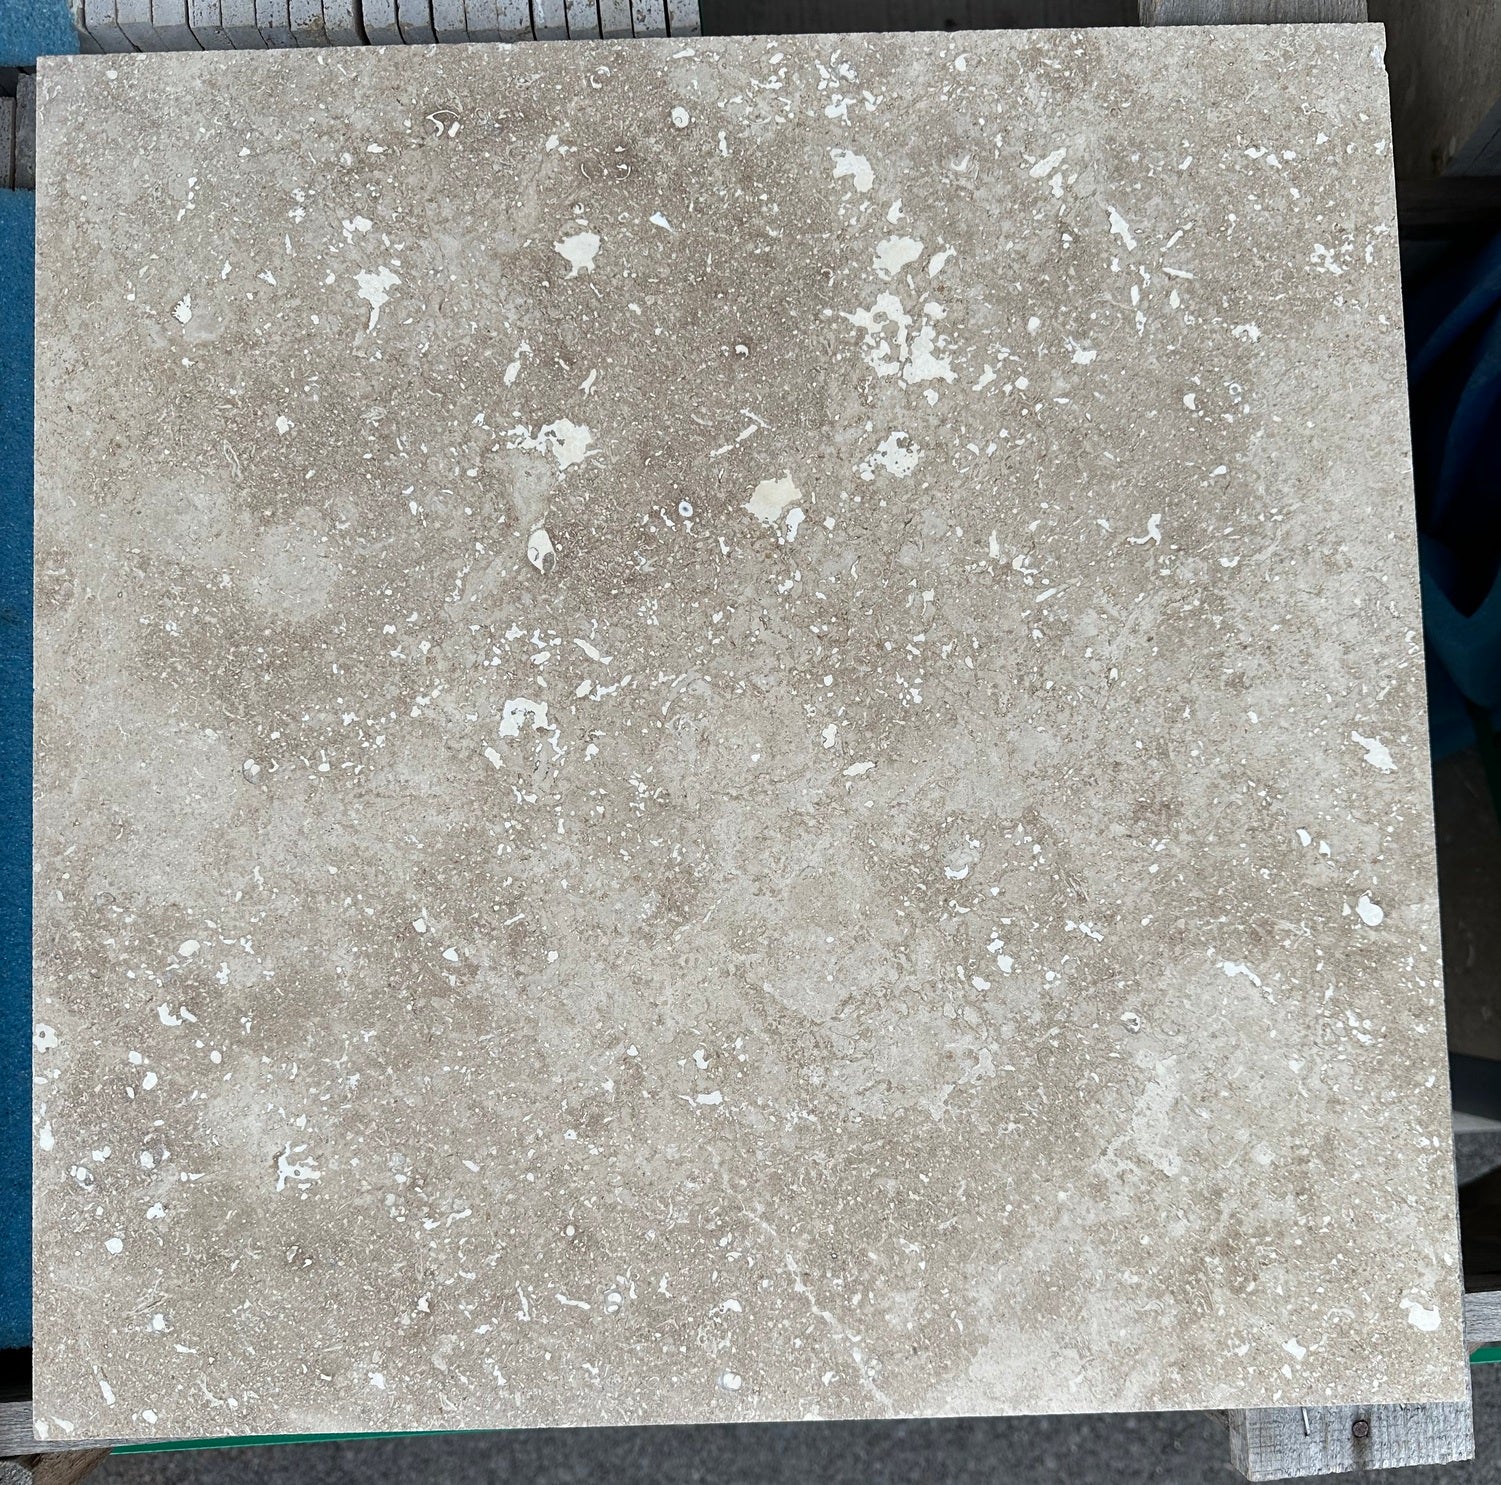 Travertine-Tile-Flooring-RUSTICO WAIMEA Travertine honed/filled tile- Stone Supplier - Rocks in Stock